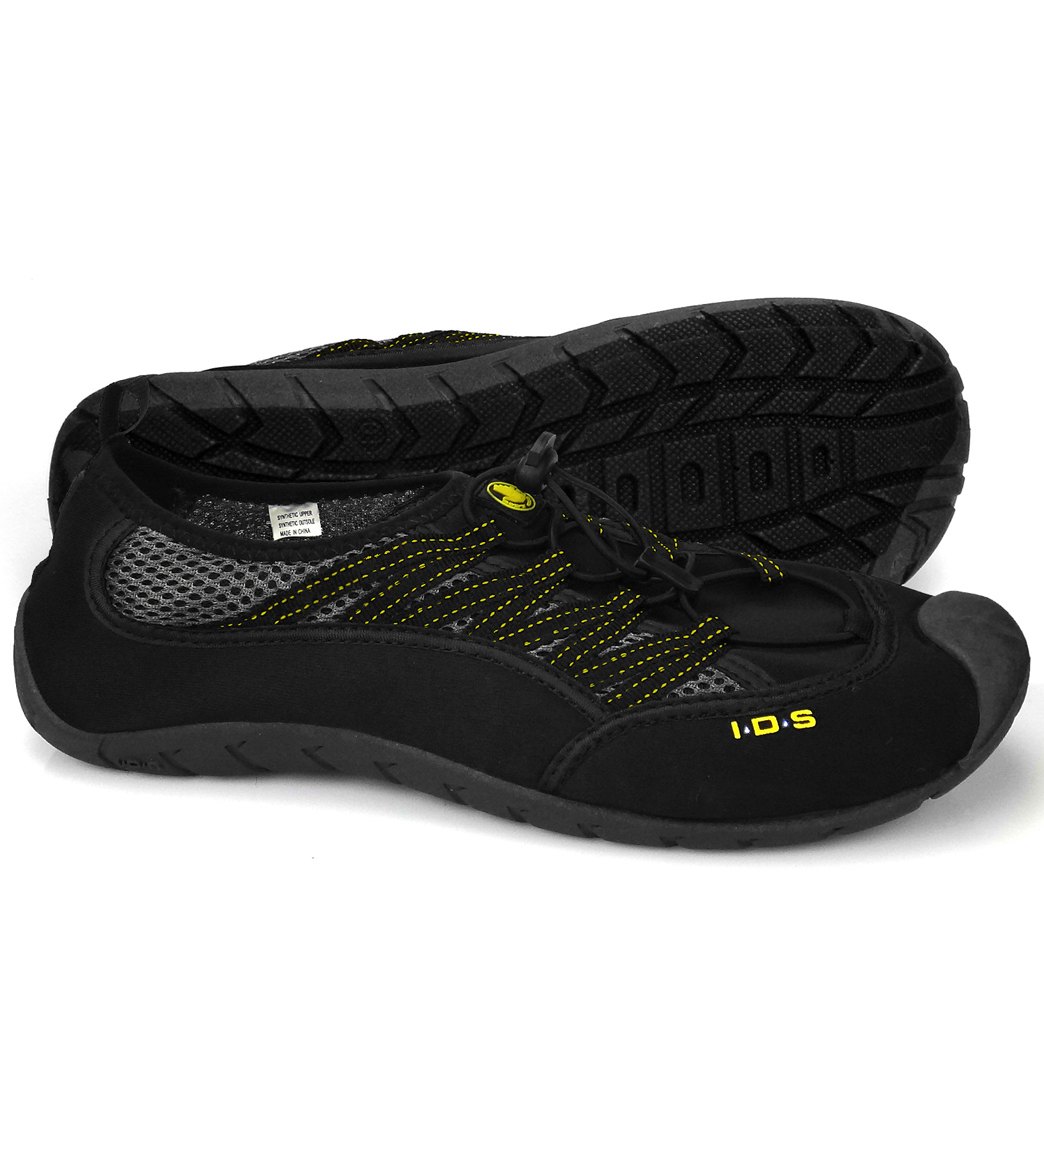 Body Glove Men's Sidewinder Water Shoe - Black/Yellow 8 - Swimoutlet.com